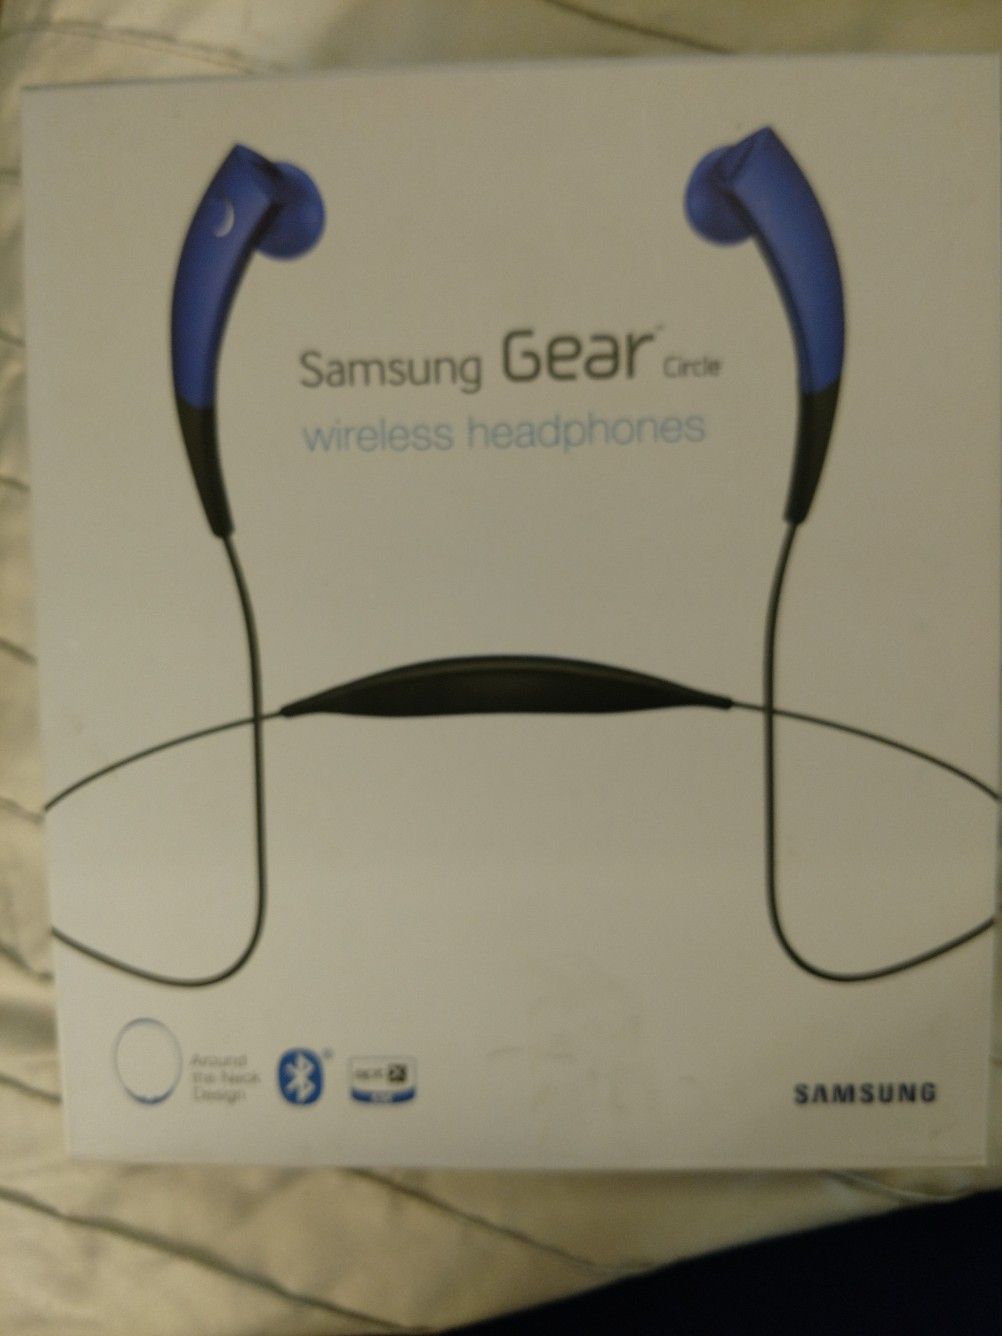 Samsung gear circle wireless headphones